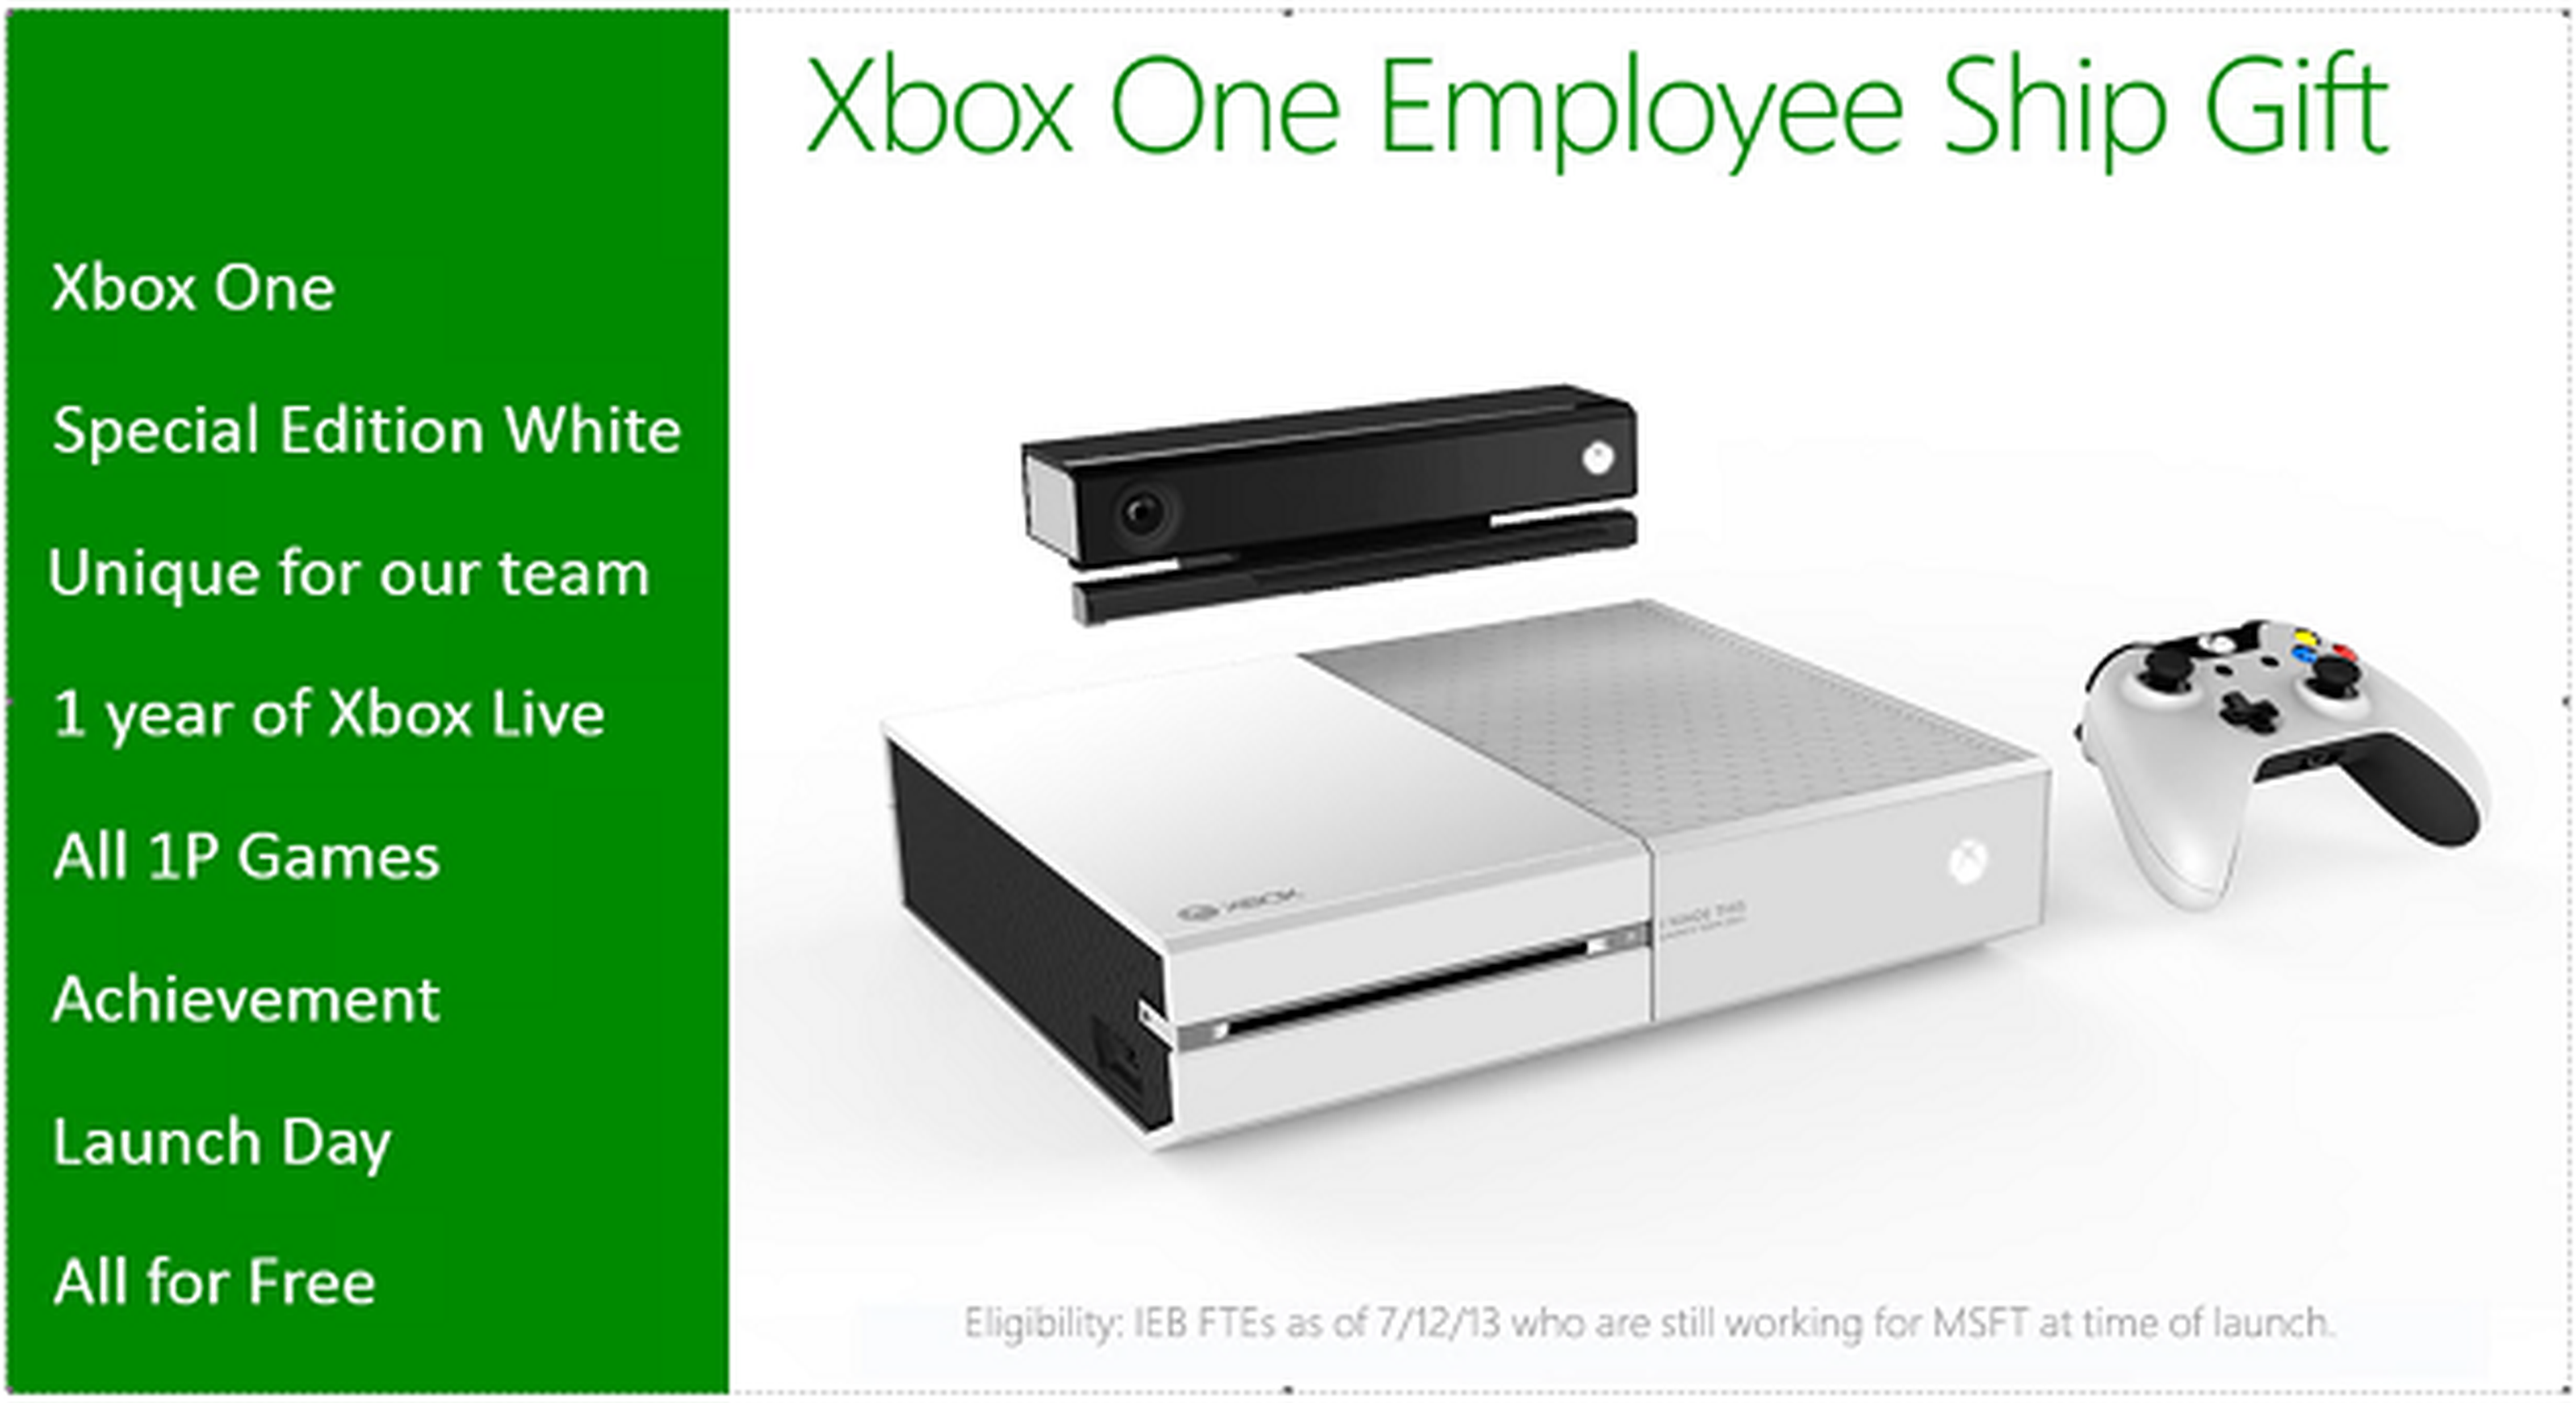 Sale a subasta una Xbox One blanca